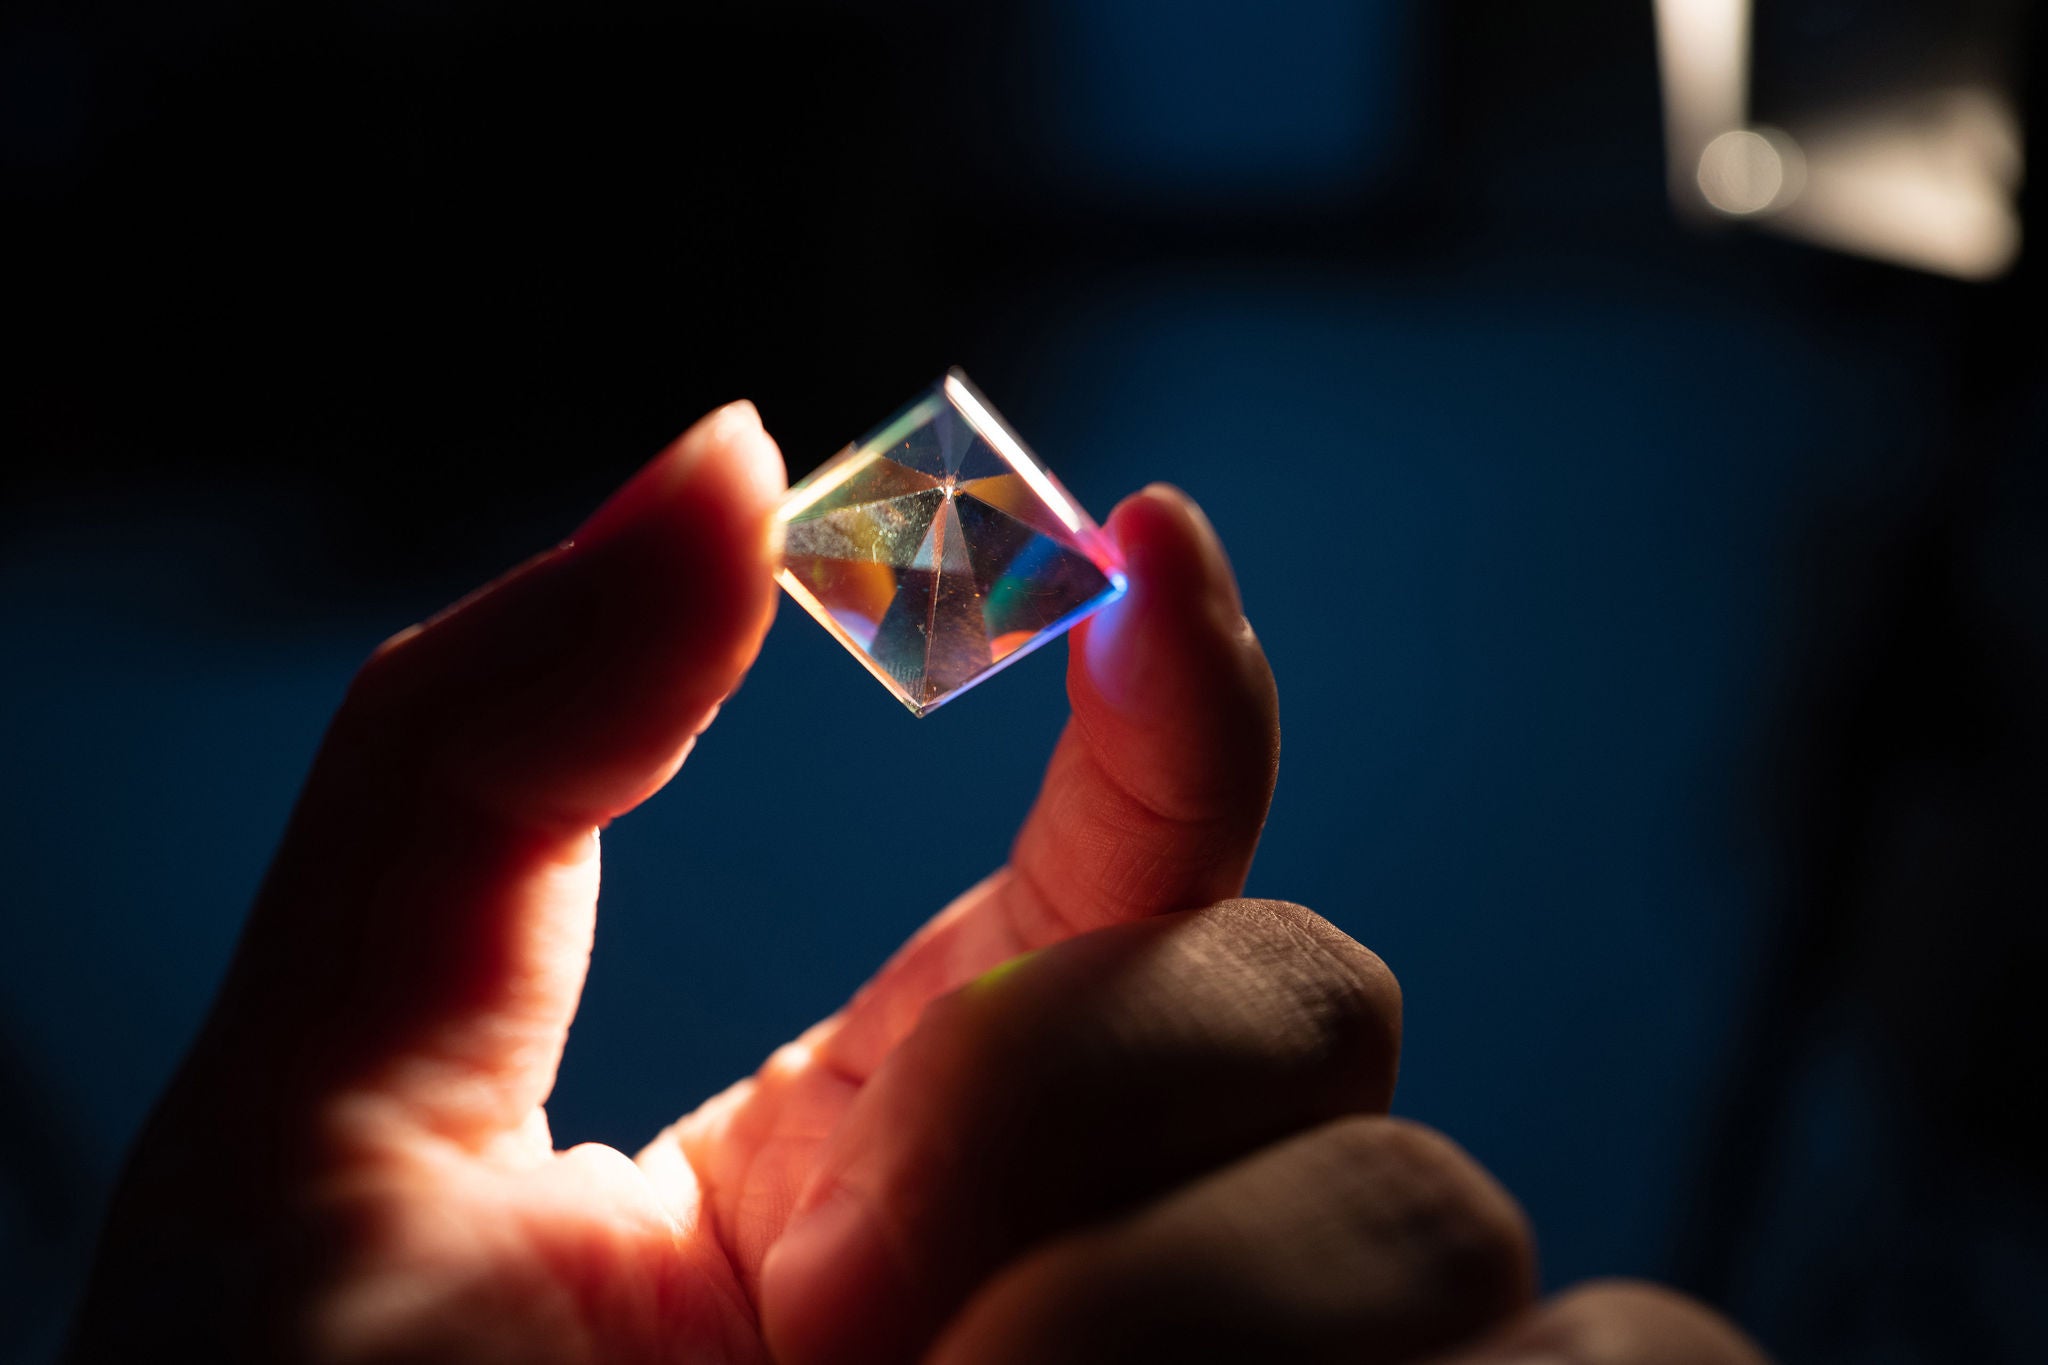 Rhombus crystal in hand closeup